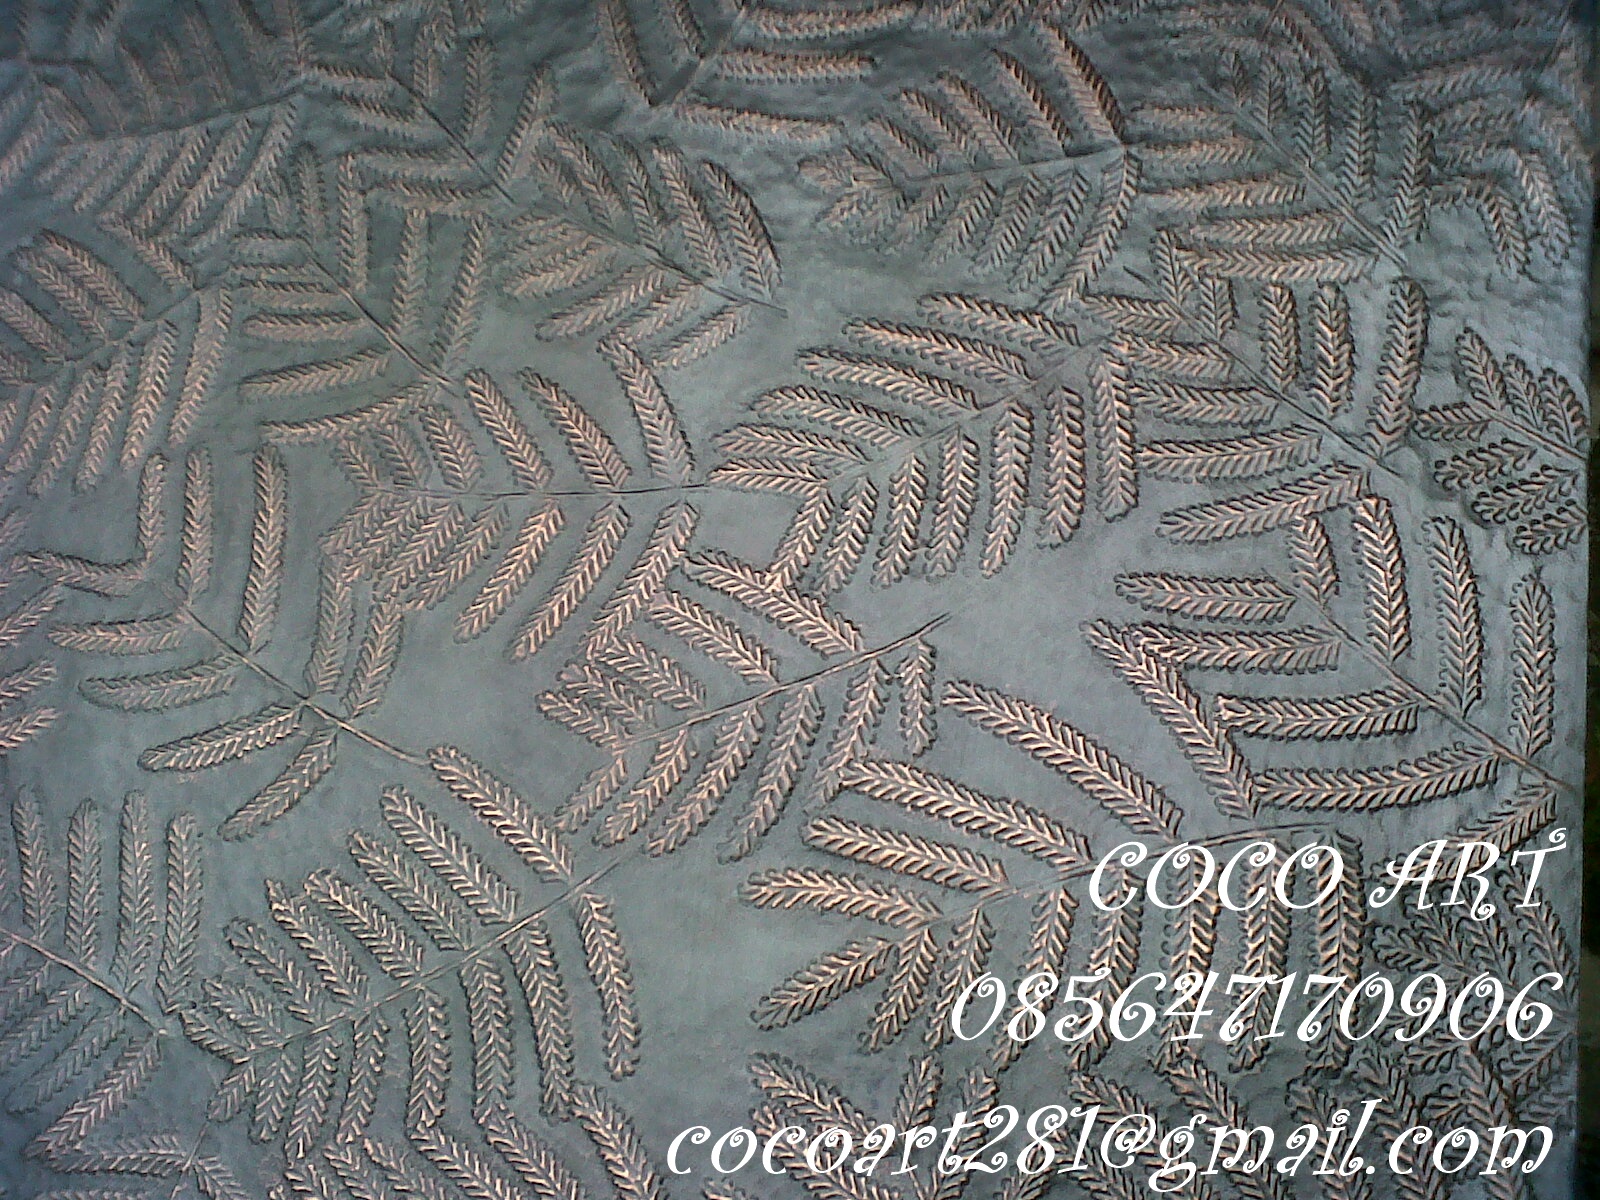  hiasan  dinding tembaga daun  pisang  tembaga Coco Art 